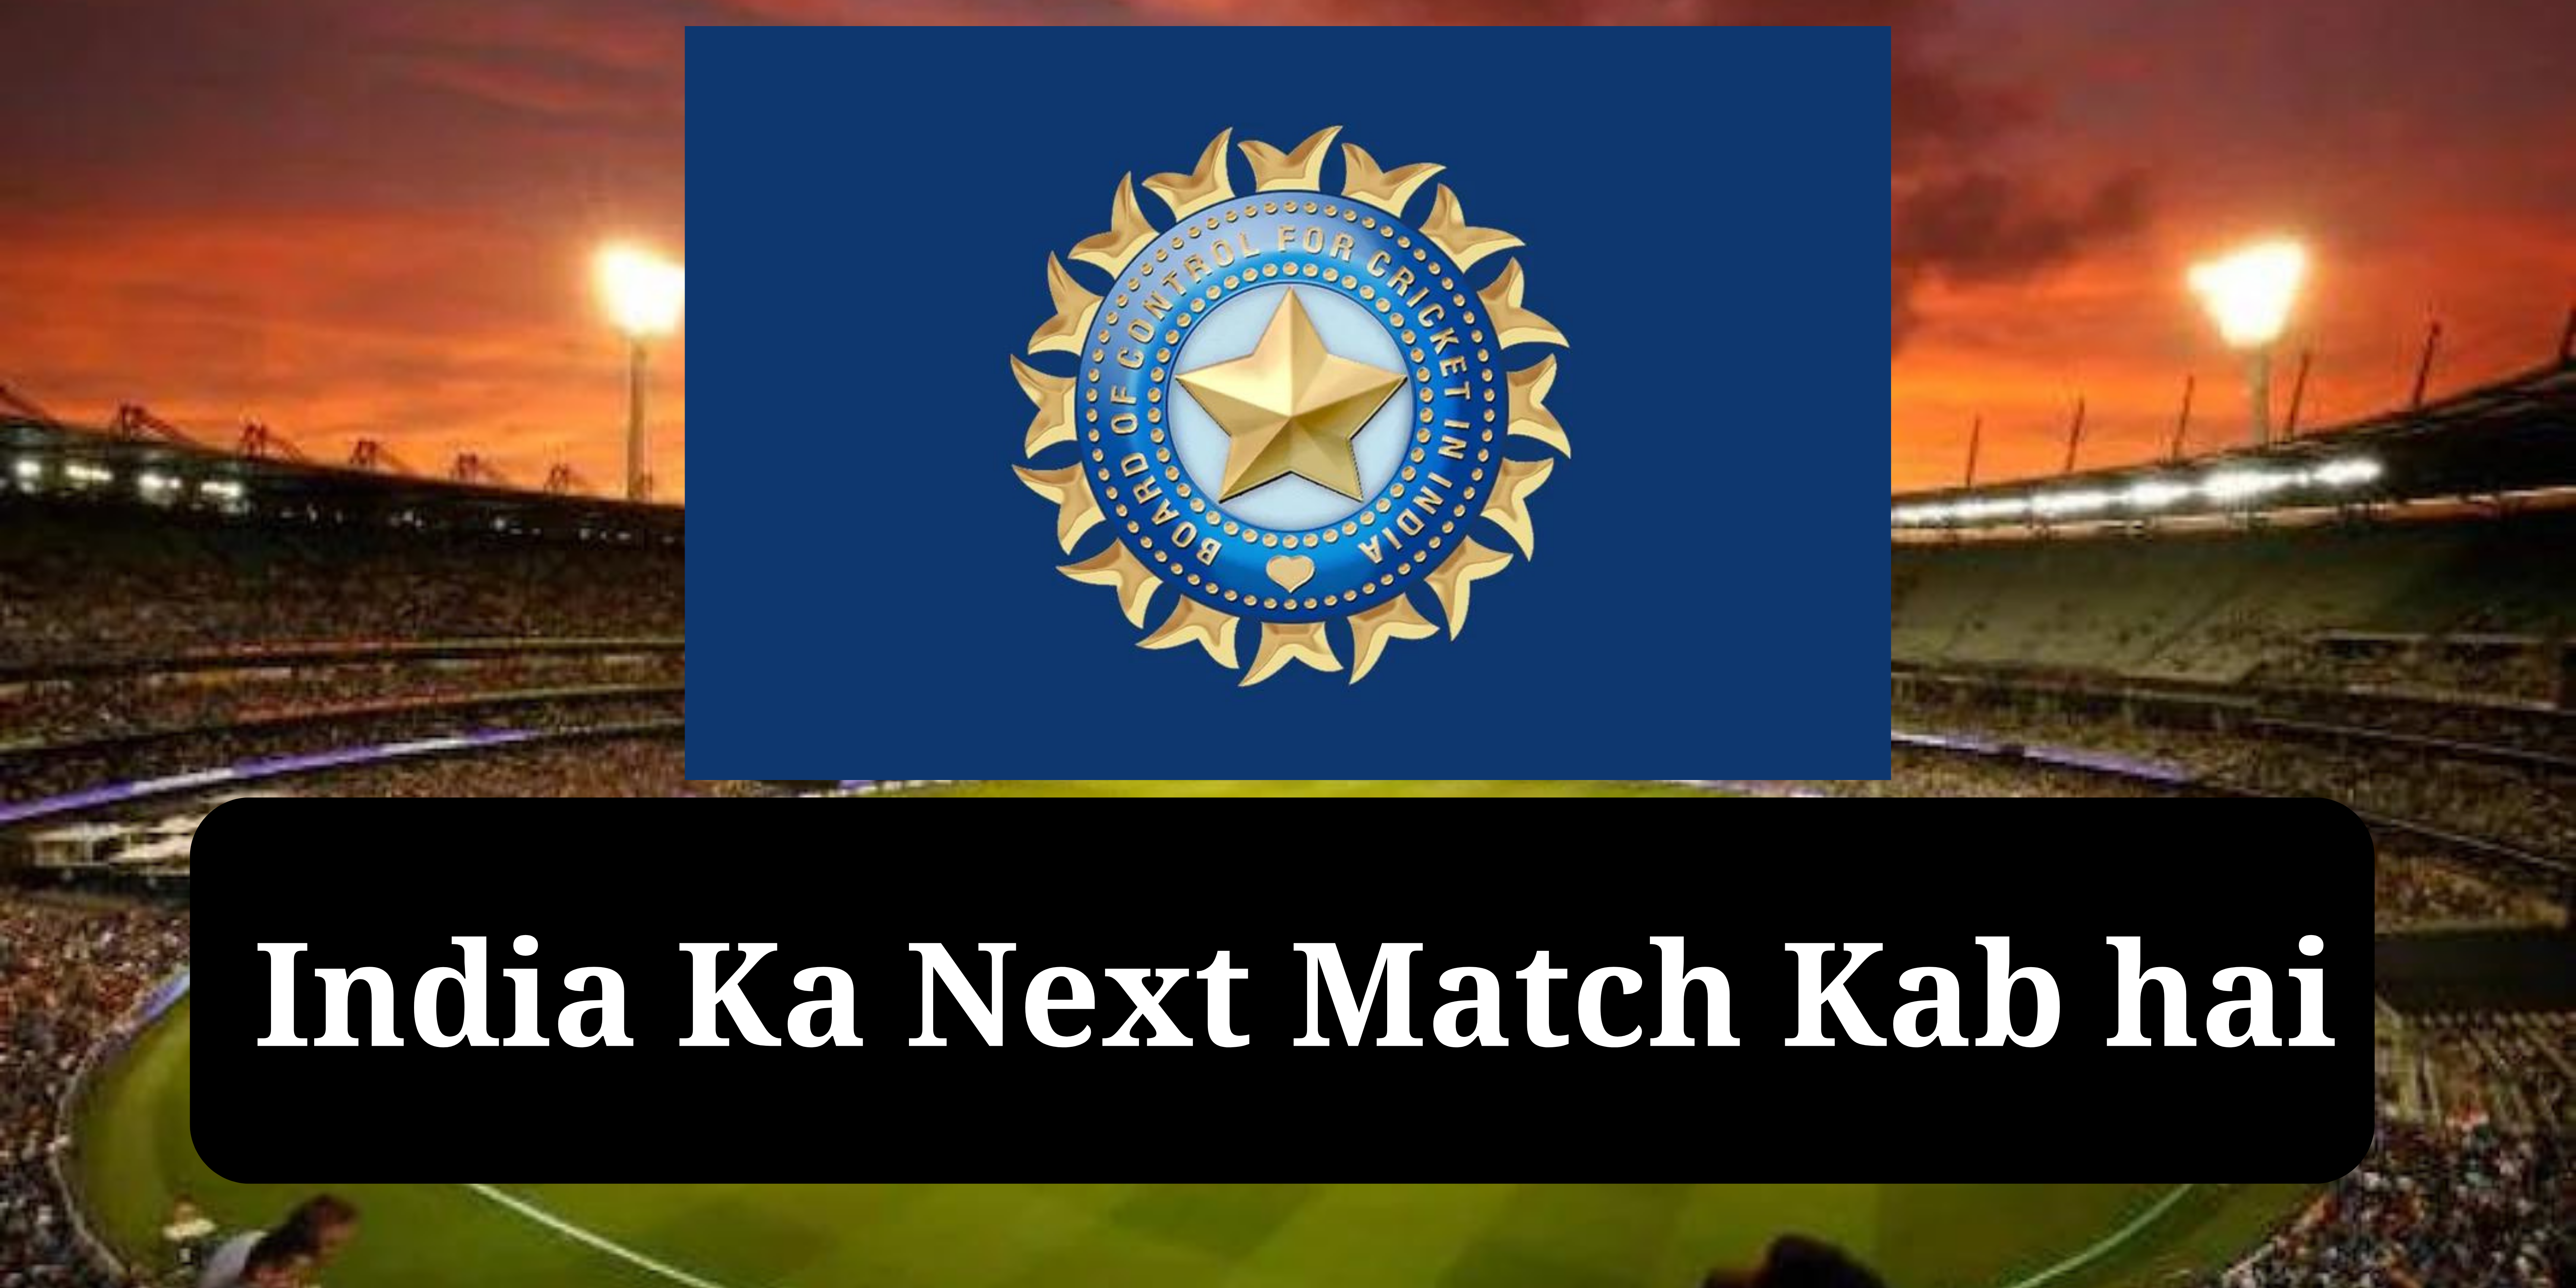 India Ka Next Match Kab hai